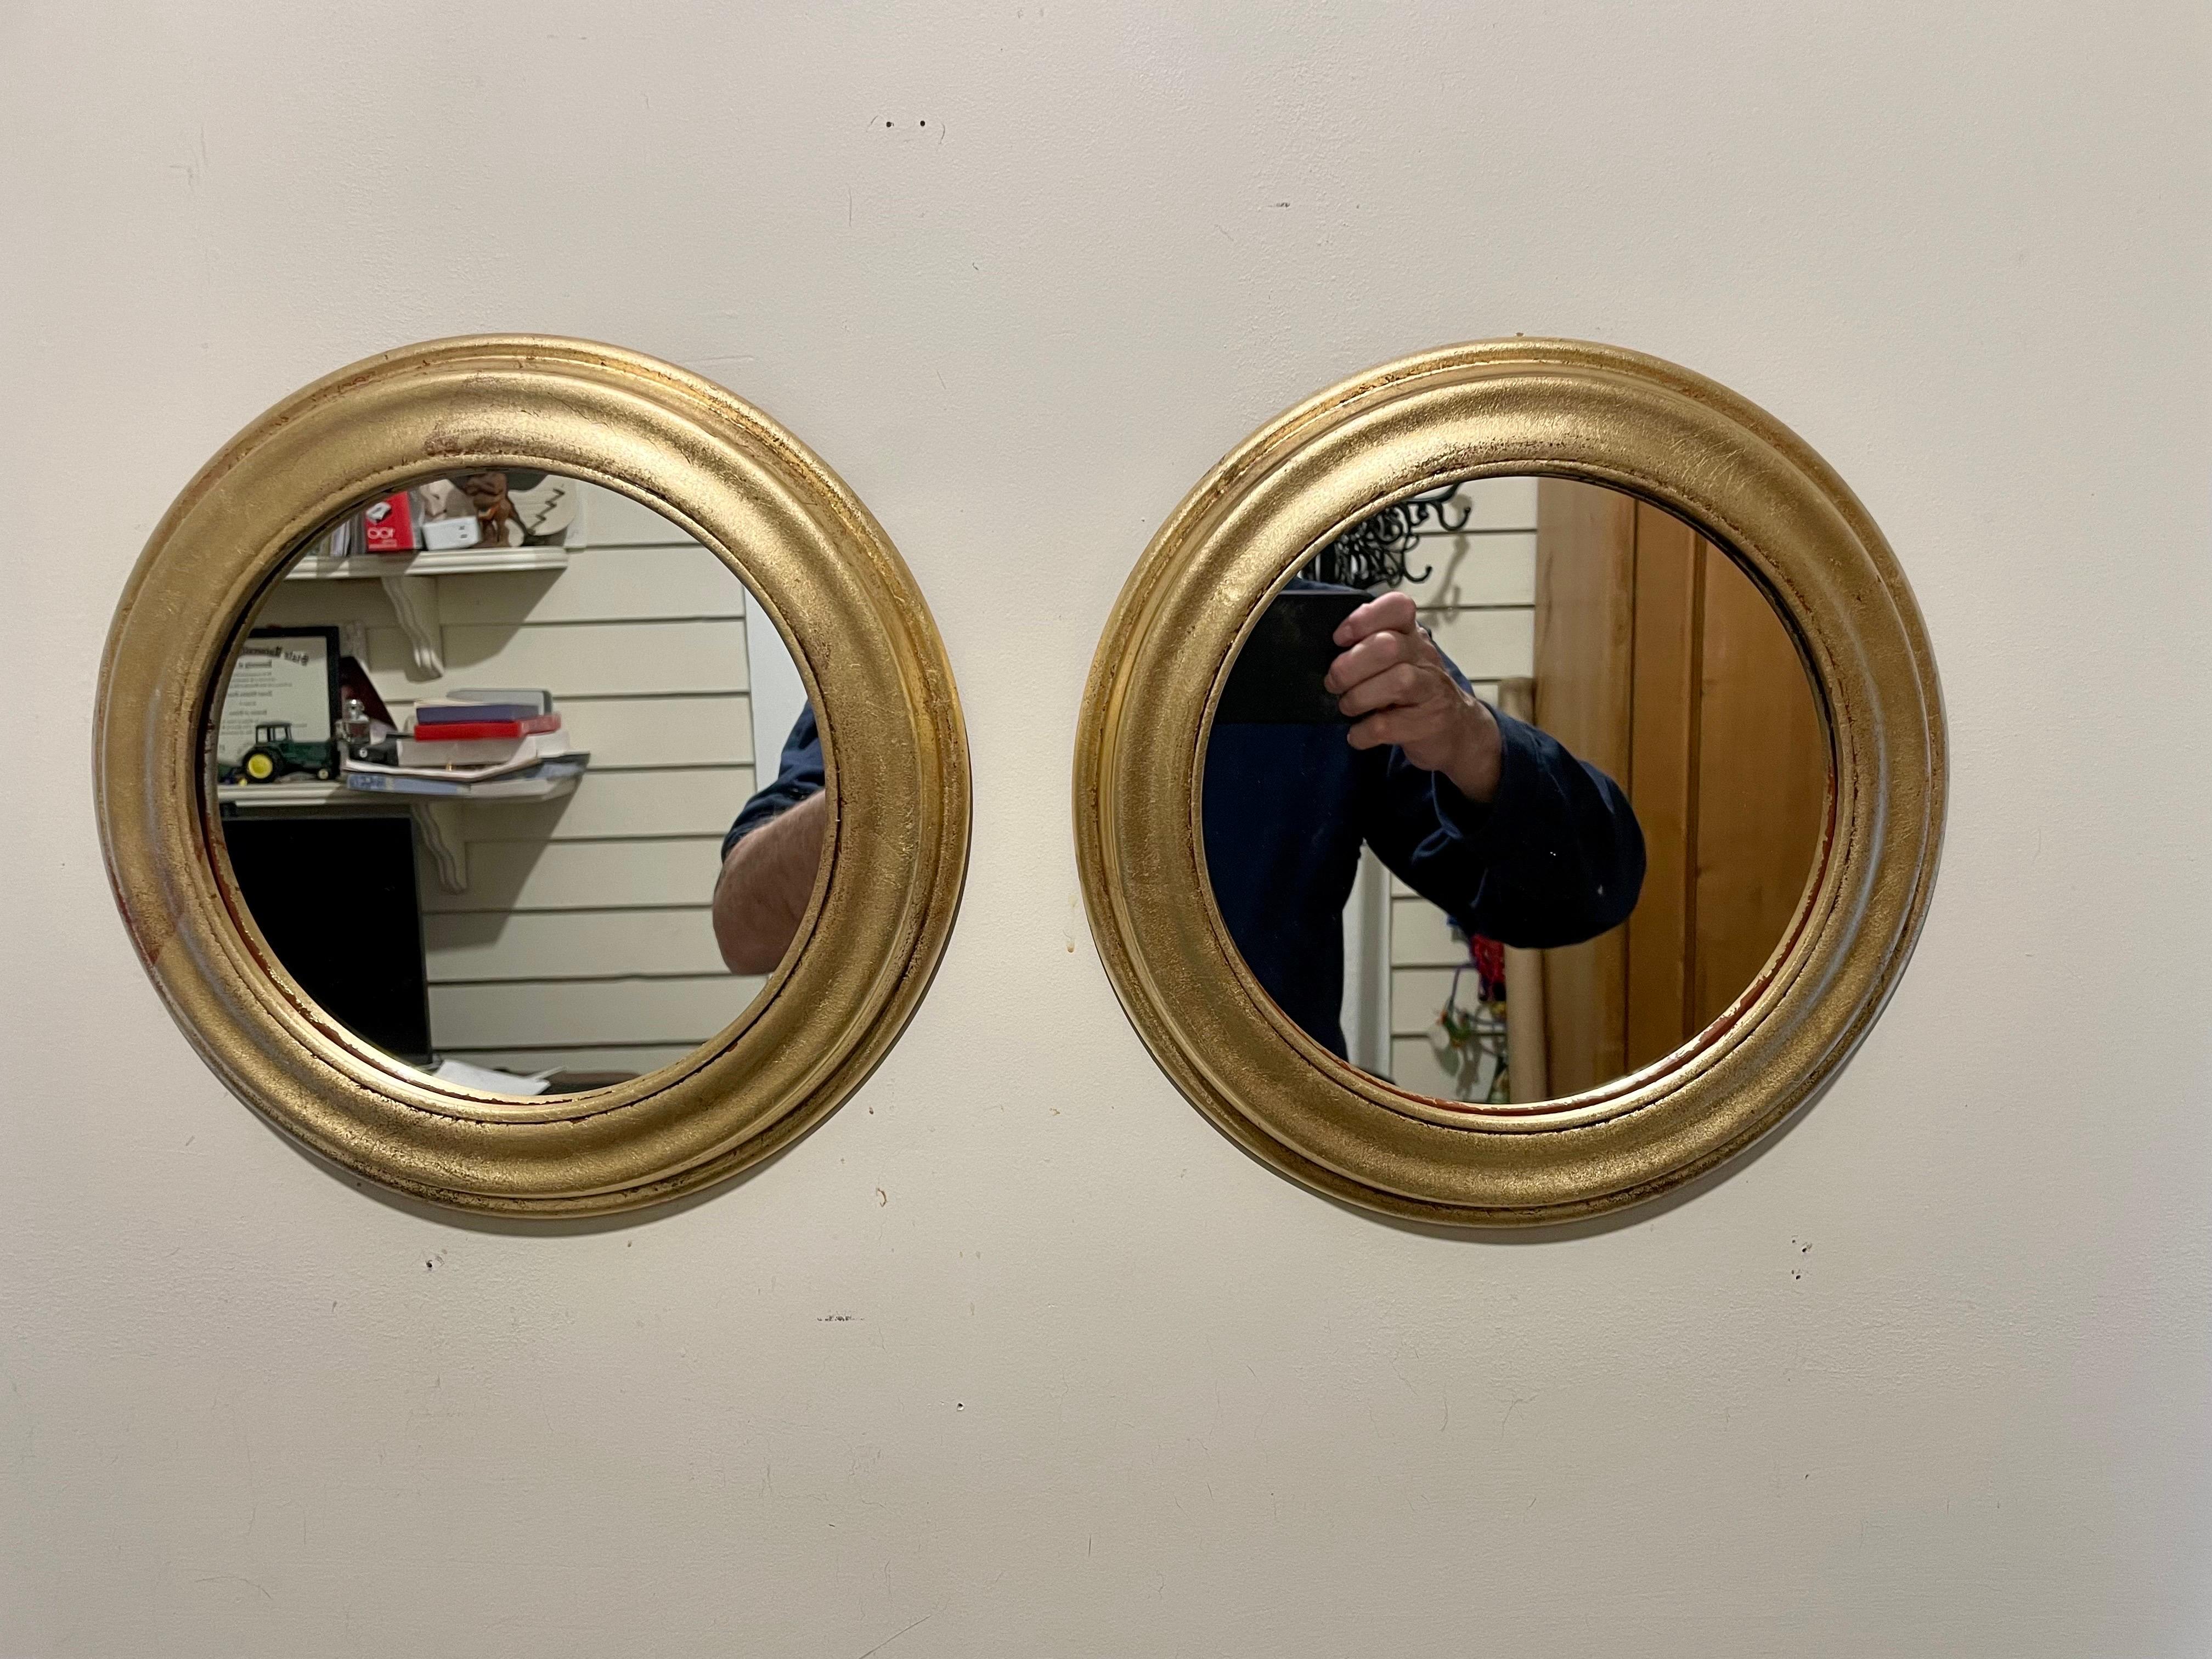 Pair Italian gilt finish round wood mirrors. Each mirror is 11